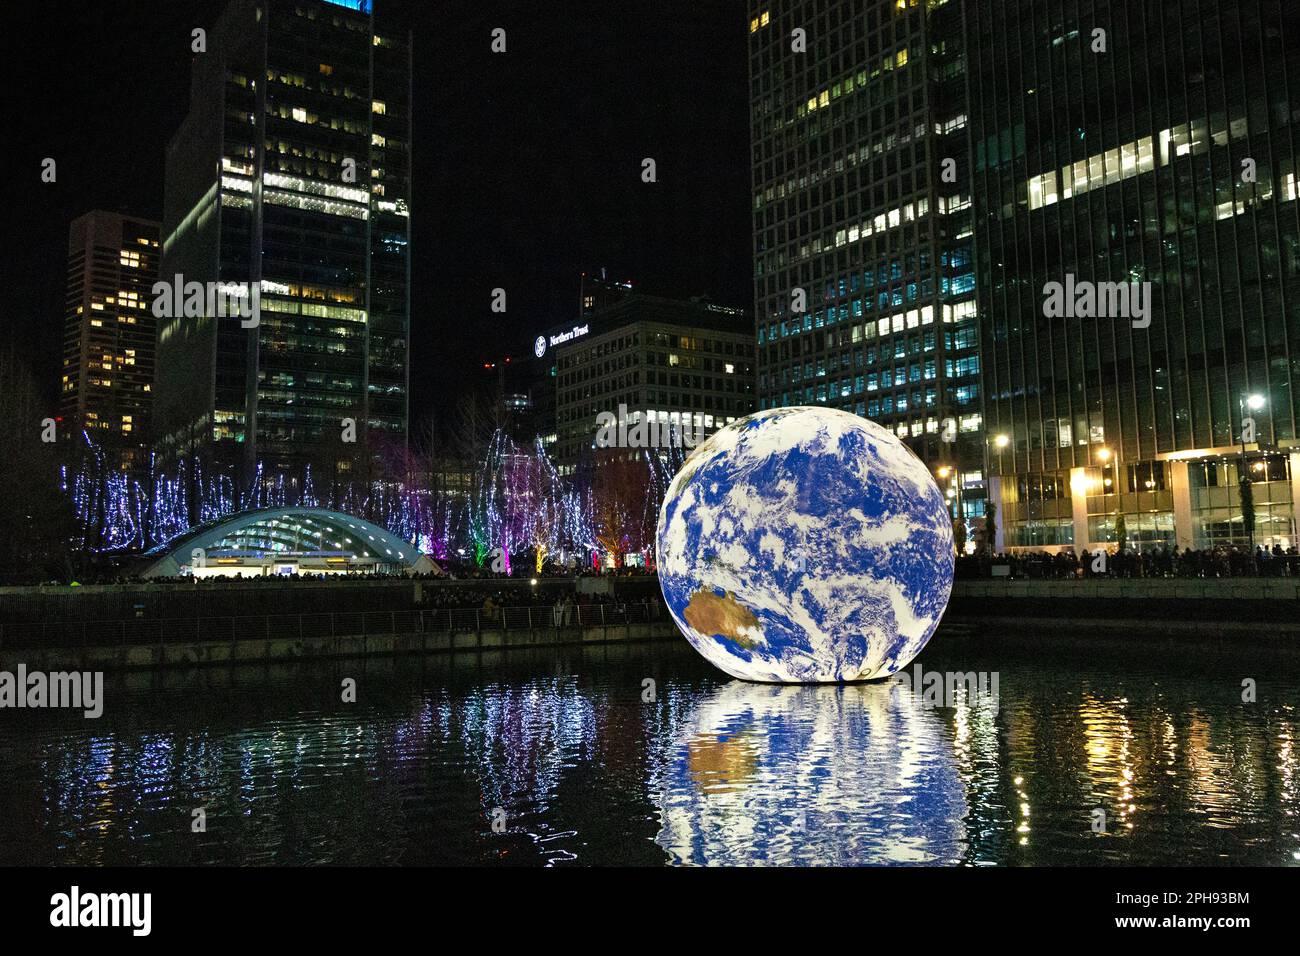 « Floating Earth » de Luke Jerram à Canary Wharf Winter Lights, Londres, Royaume-Uni Banque D'Images